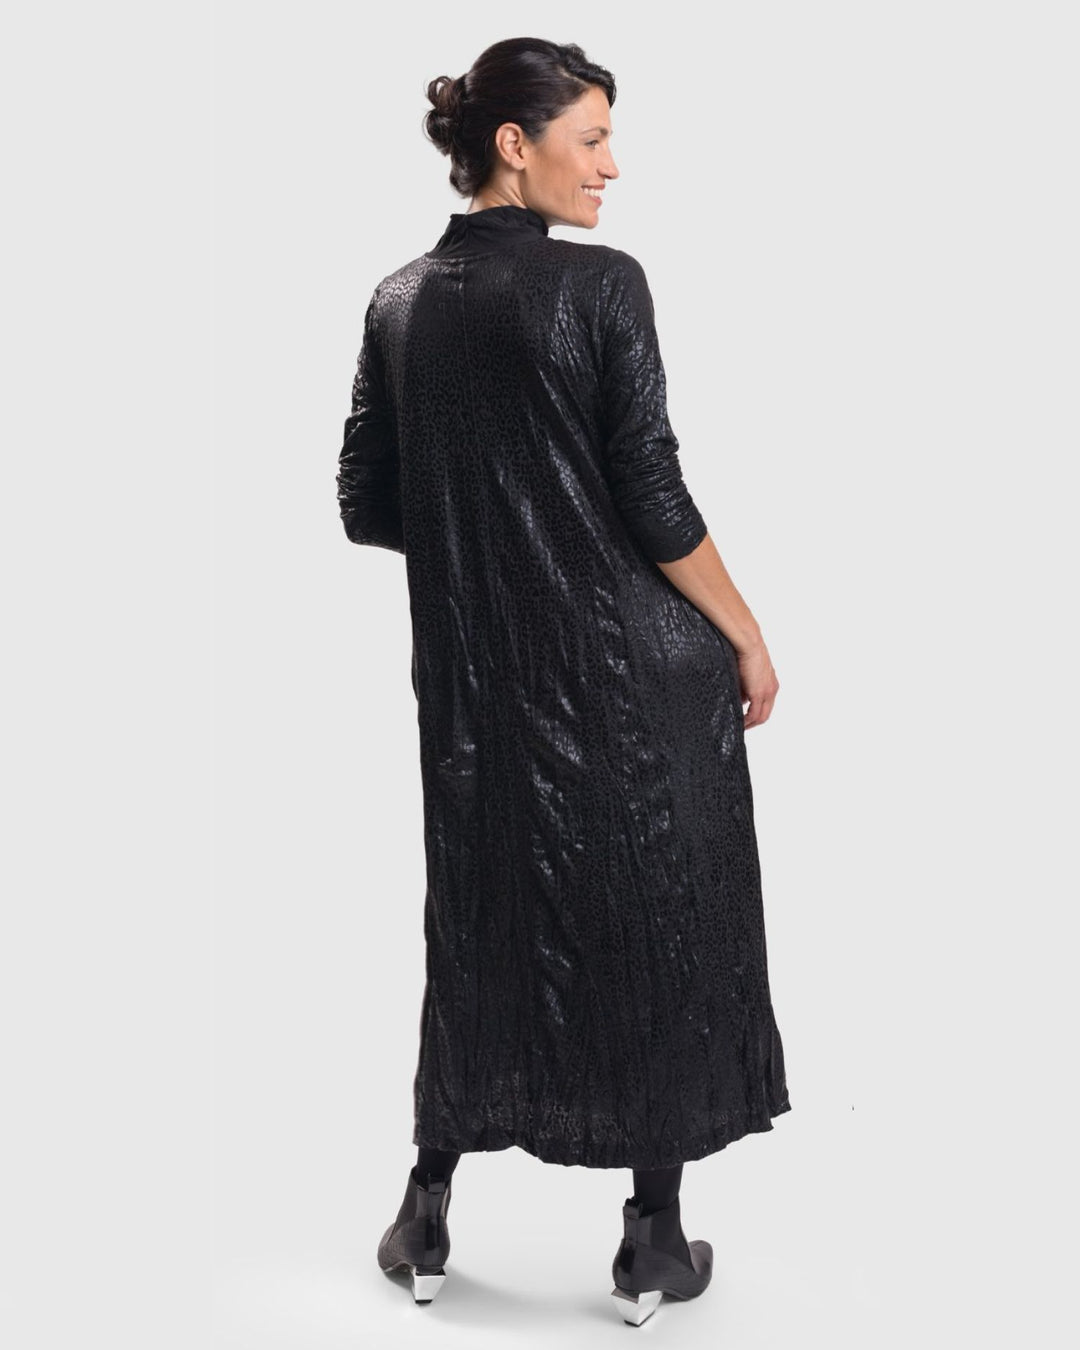 Glimmer Maxi Dress, Black